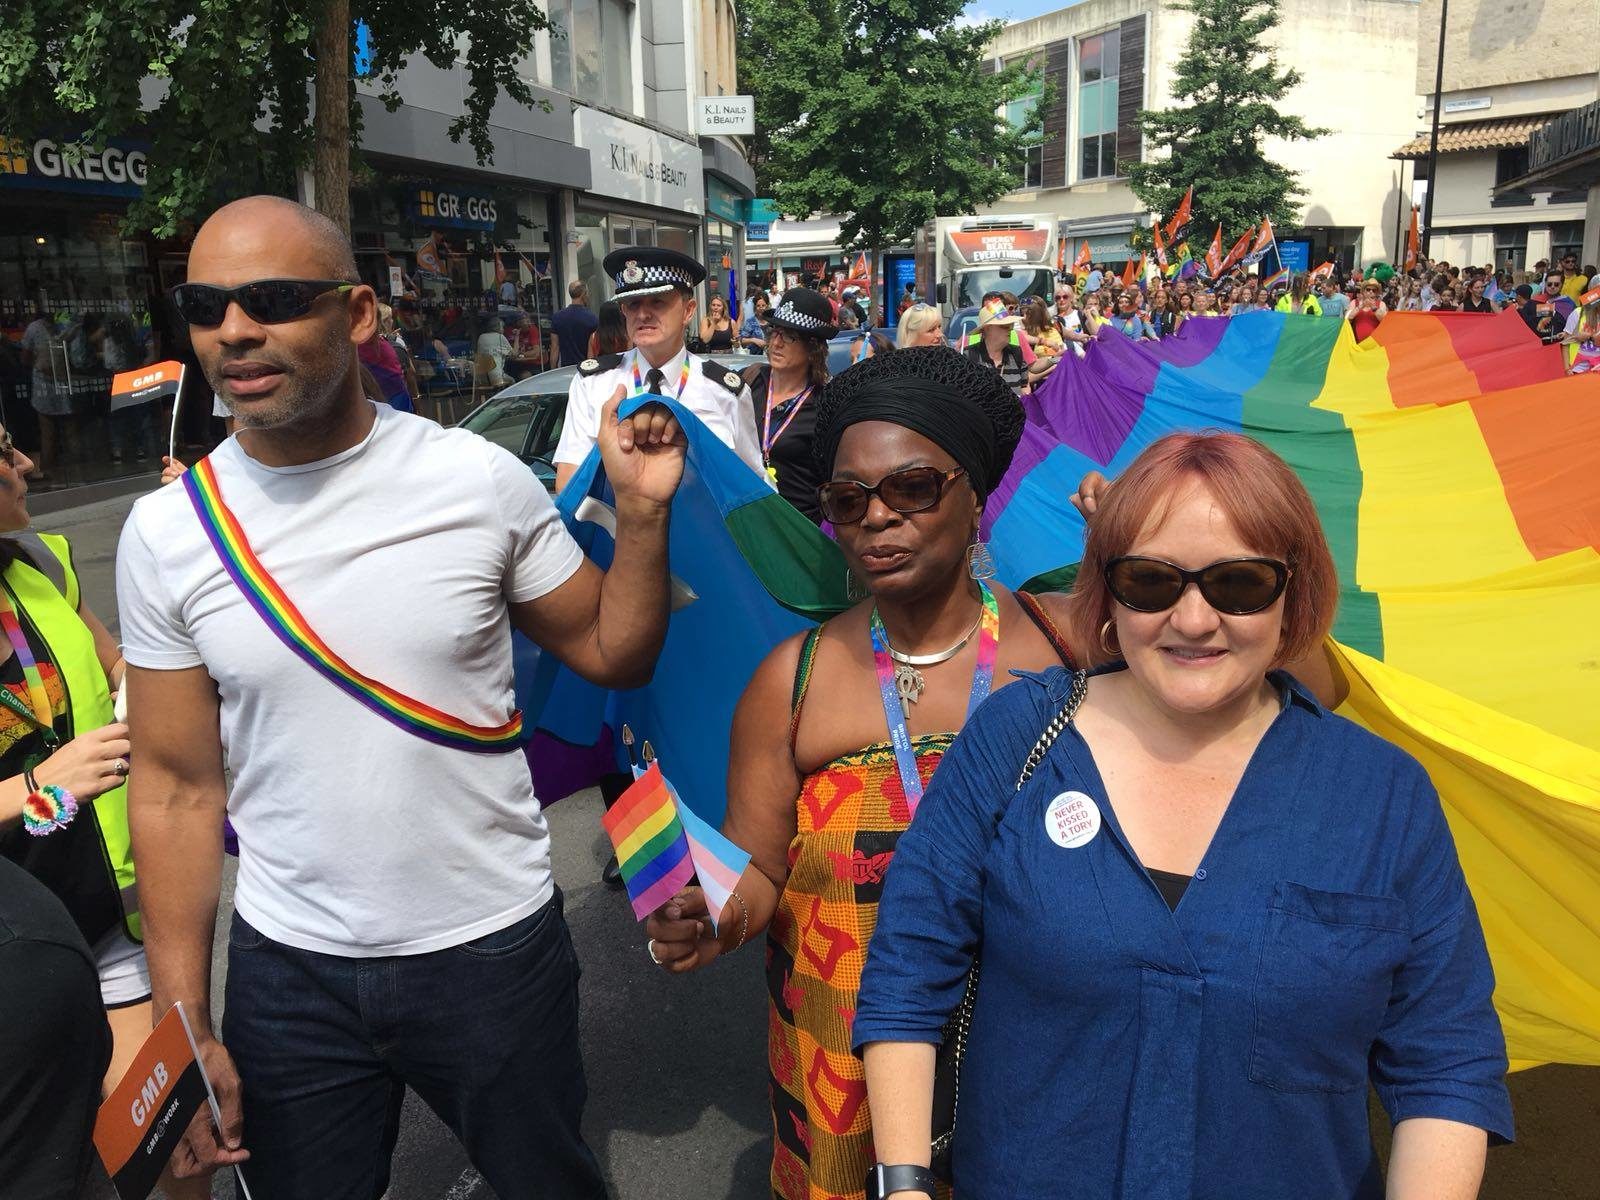 Kerry alongside Mayor Marvin Rees and Deputy Mayor Asher Craig at Bristol Pride.